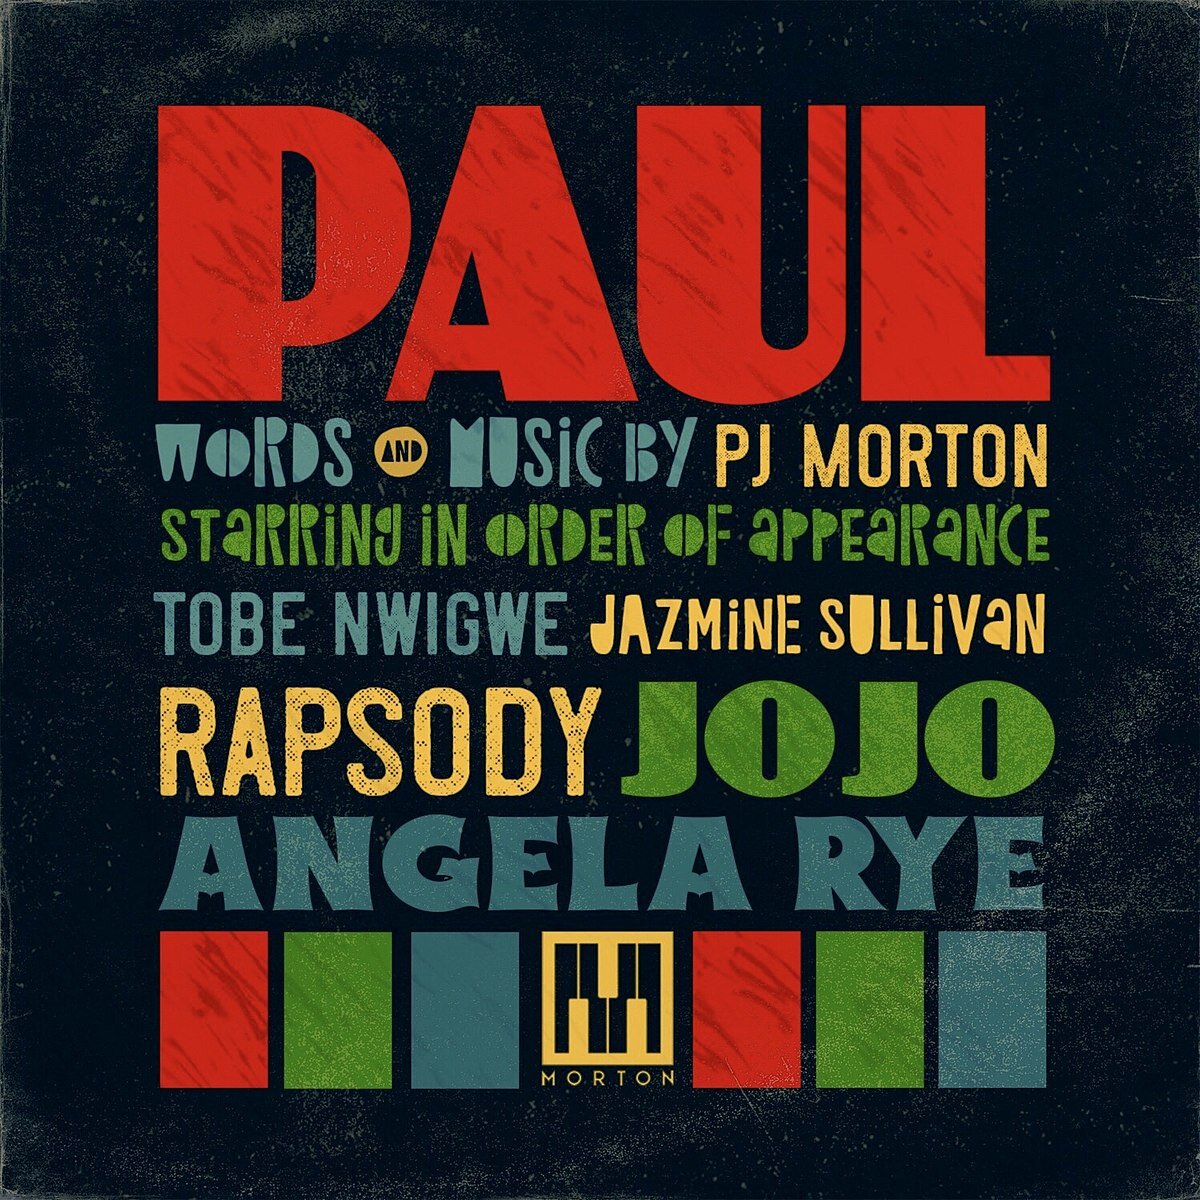 1200px-PJ-Morton-Paul-album-cover.jpg